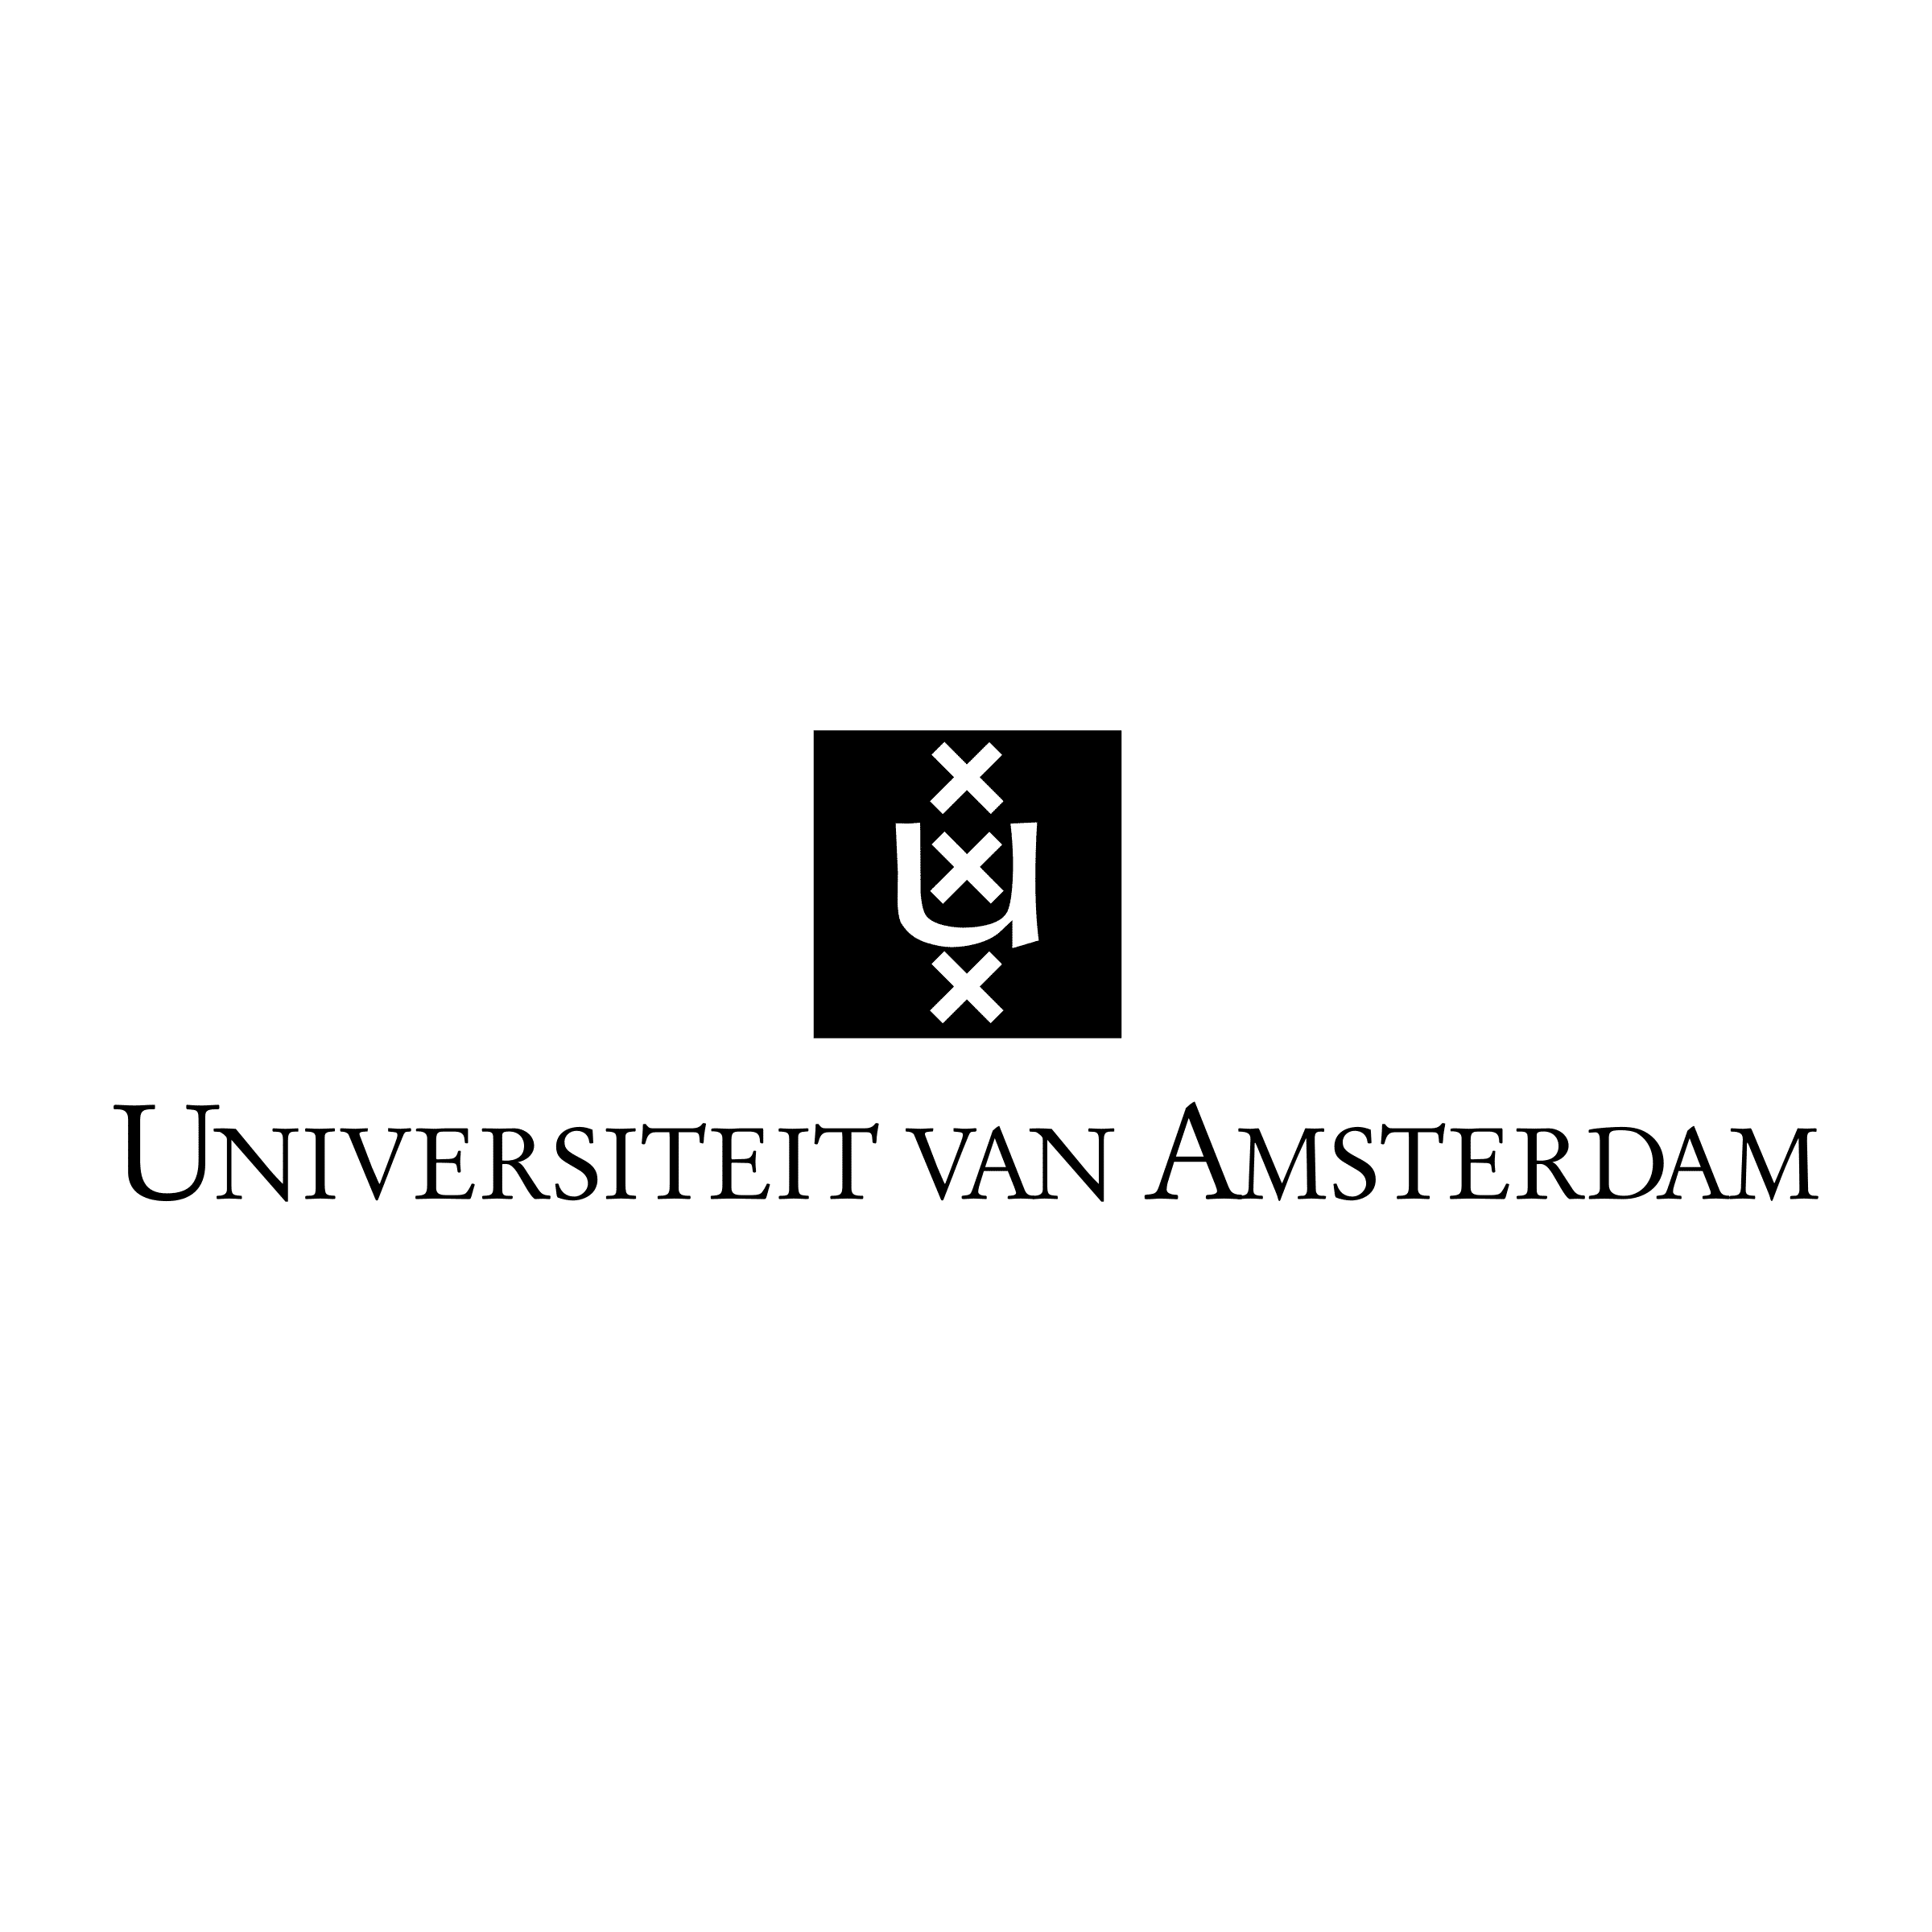 Univerity of Amsterdam logo